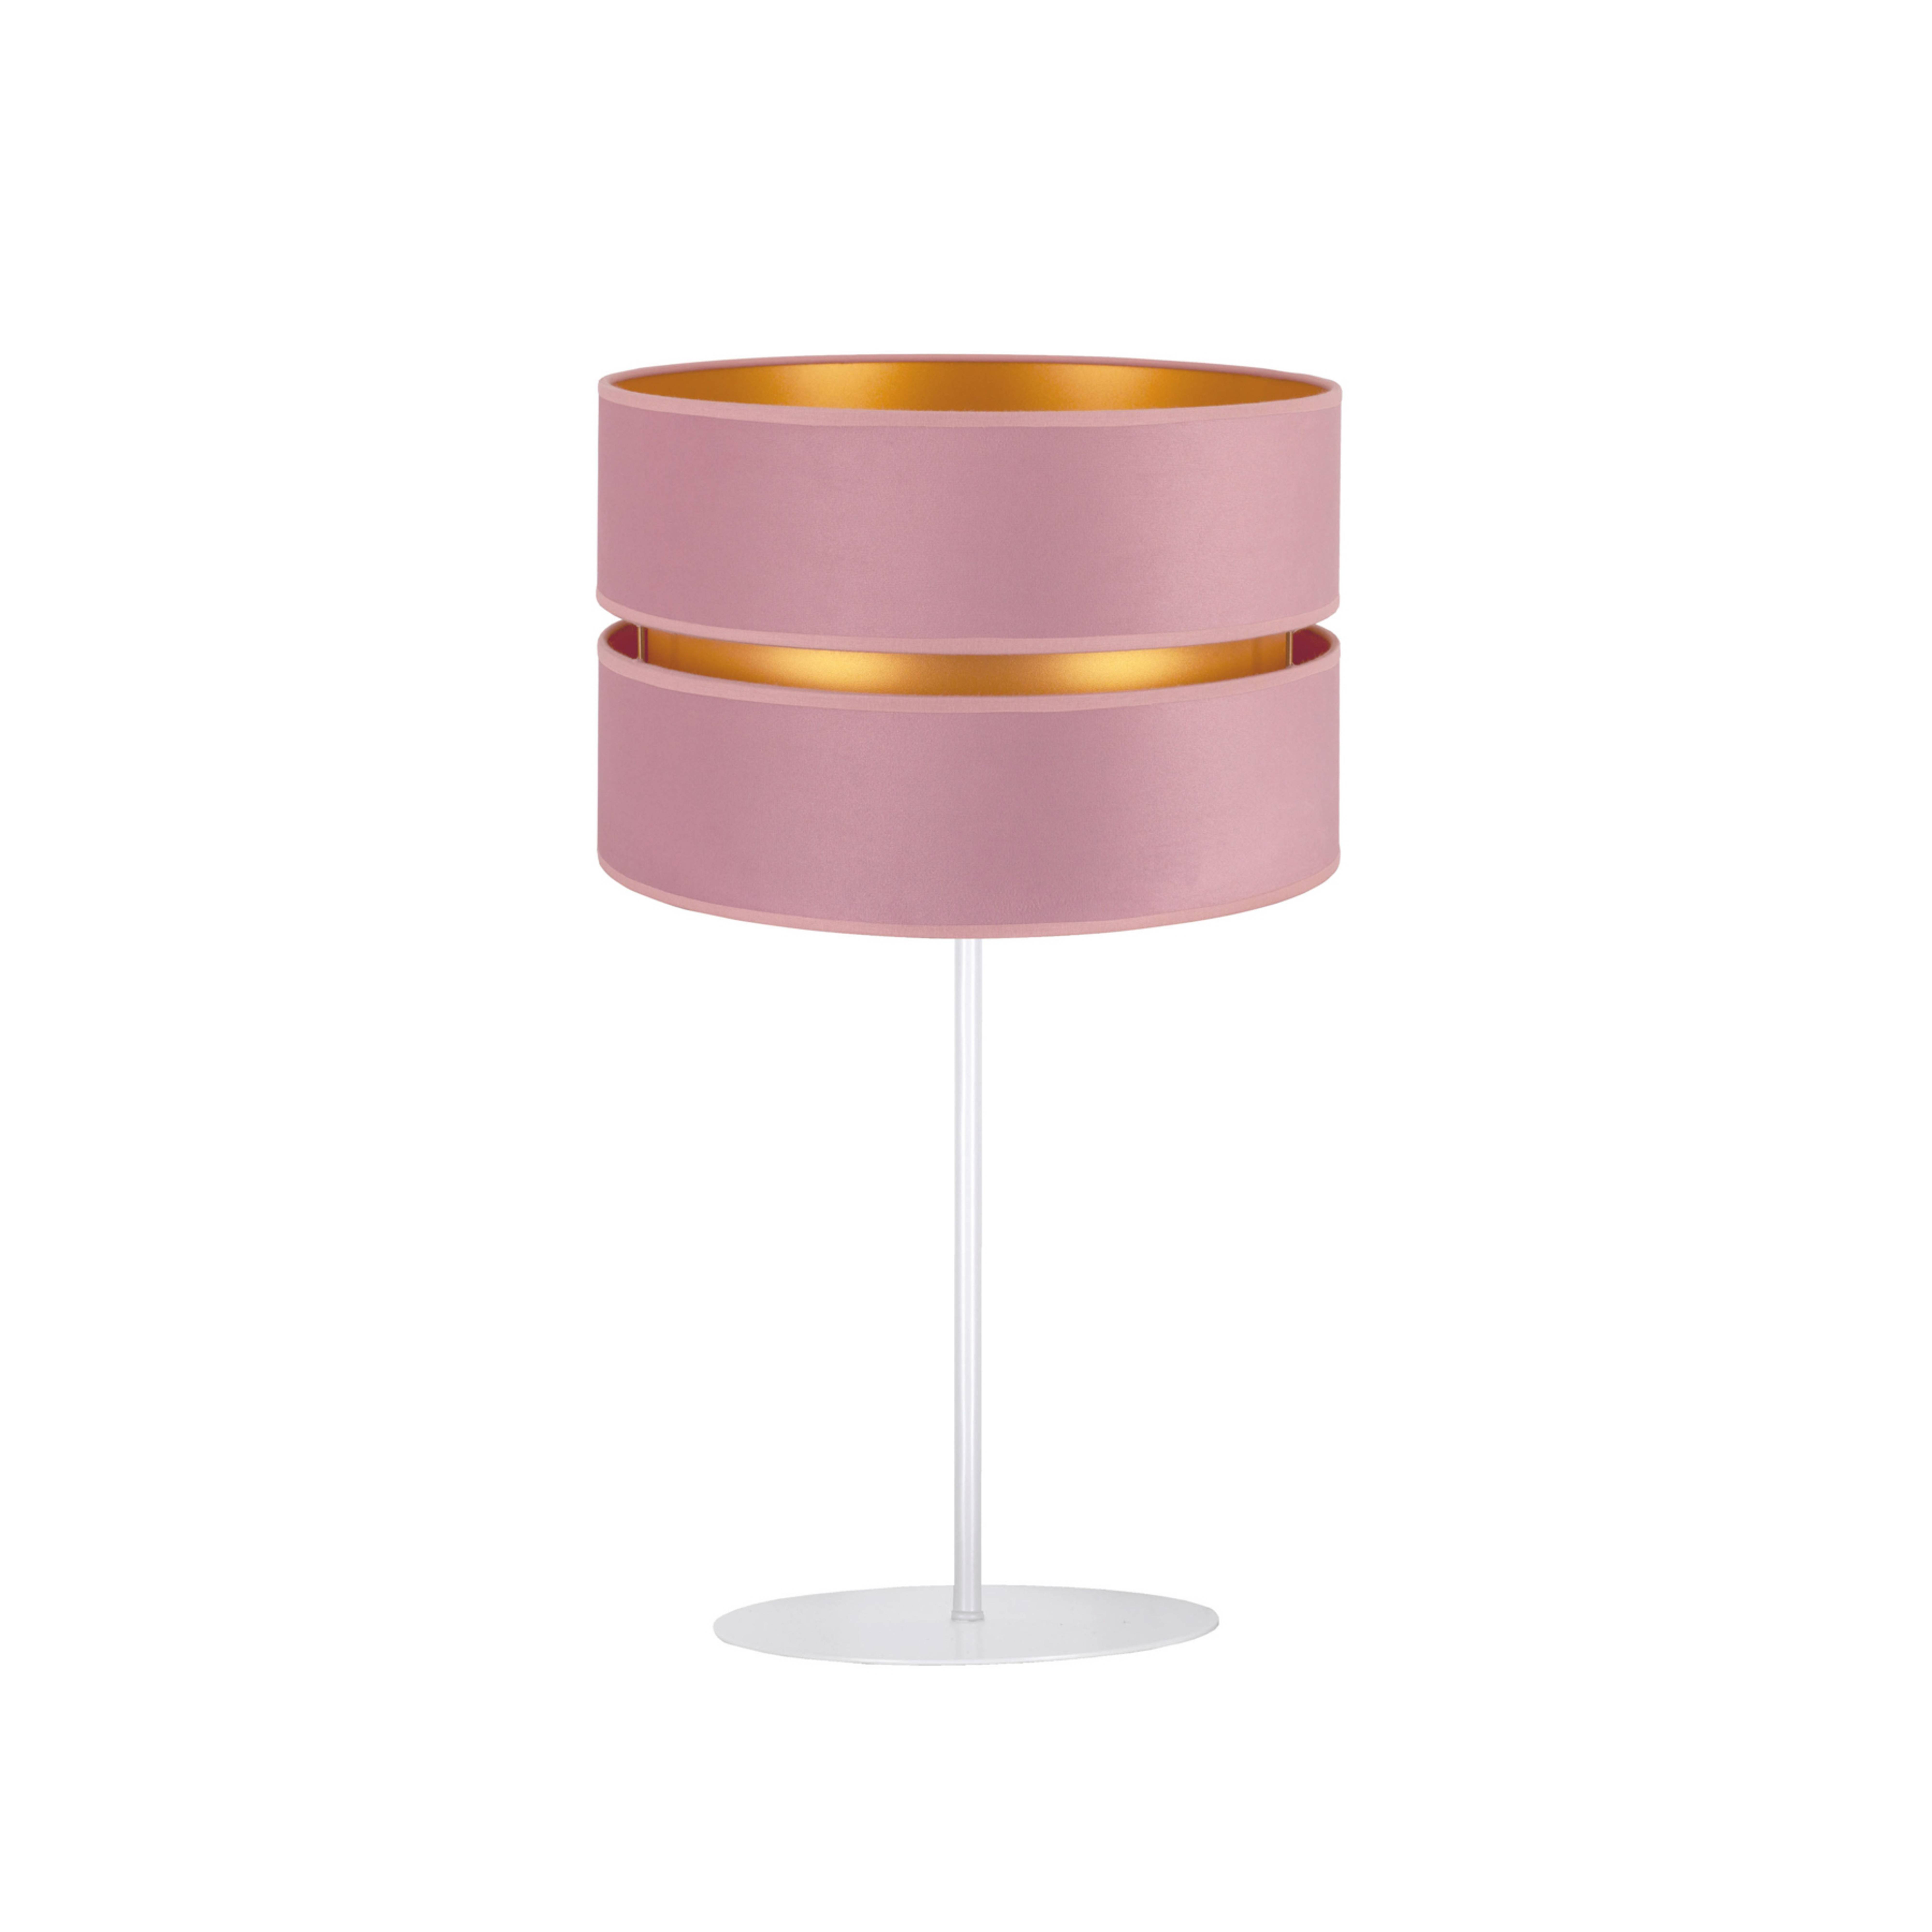 Golden Duo επιτραπέζιο φωτιστικό ύψος 50 cm ανοιχτό ροζ/χρυσό